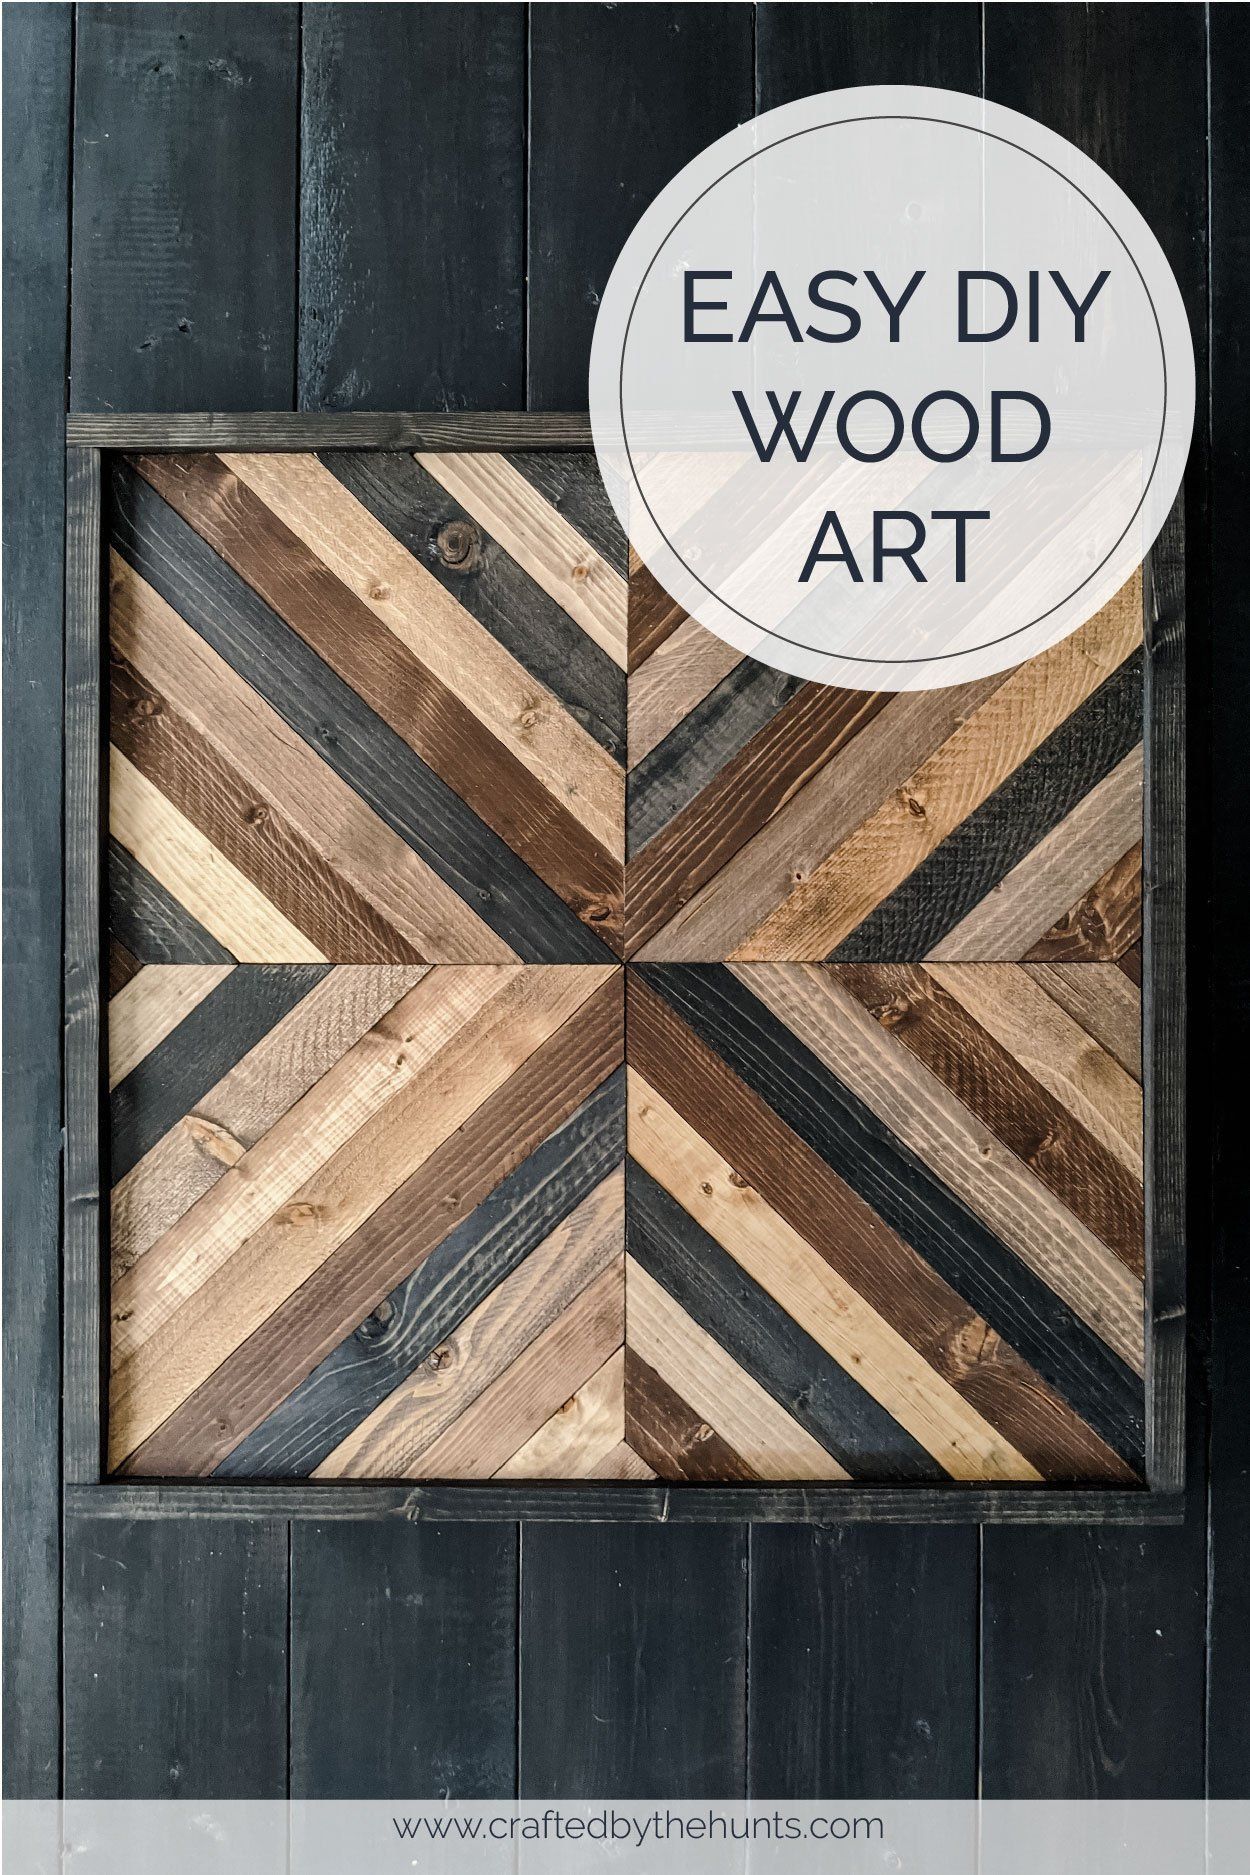 19 diy Wood decor ideas